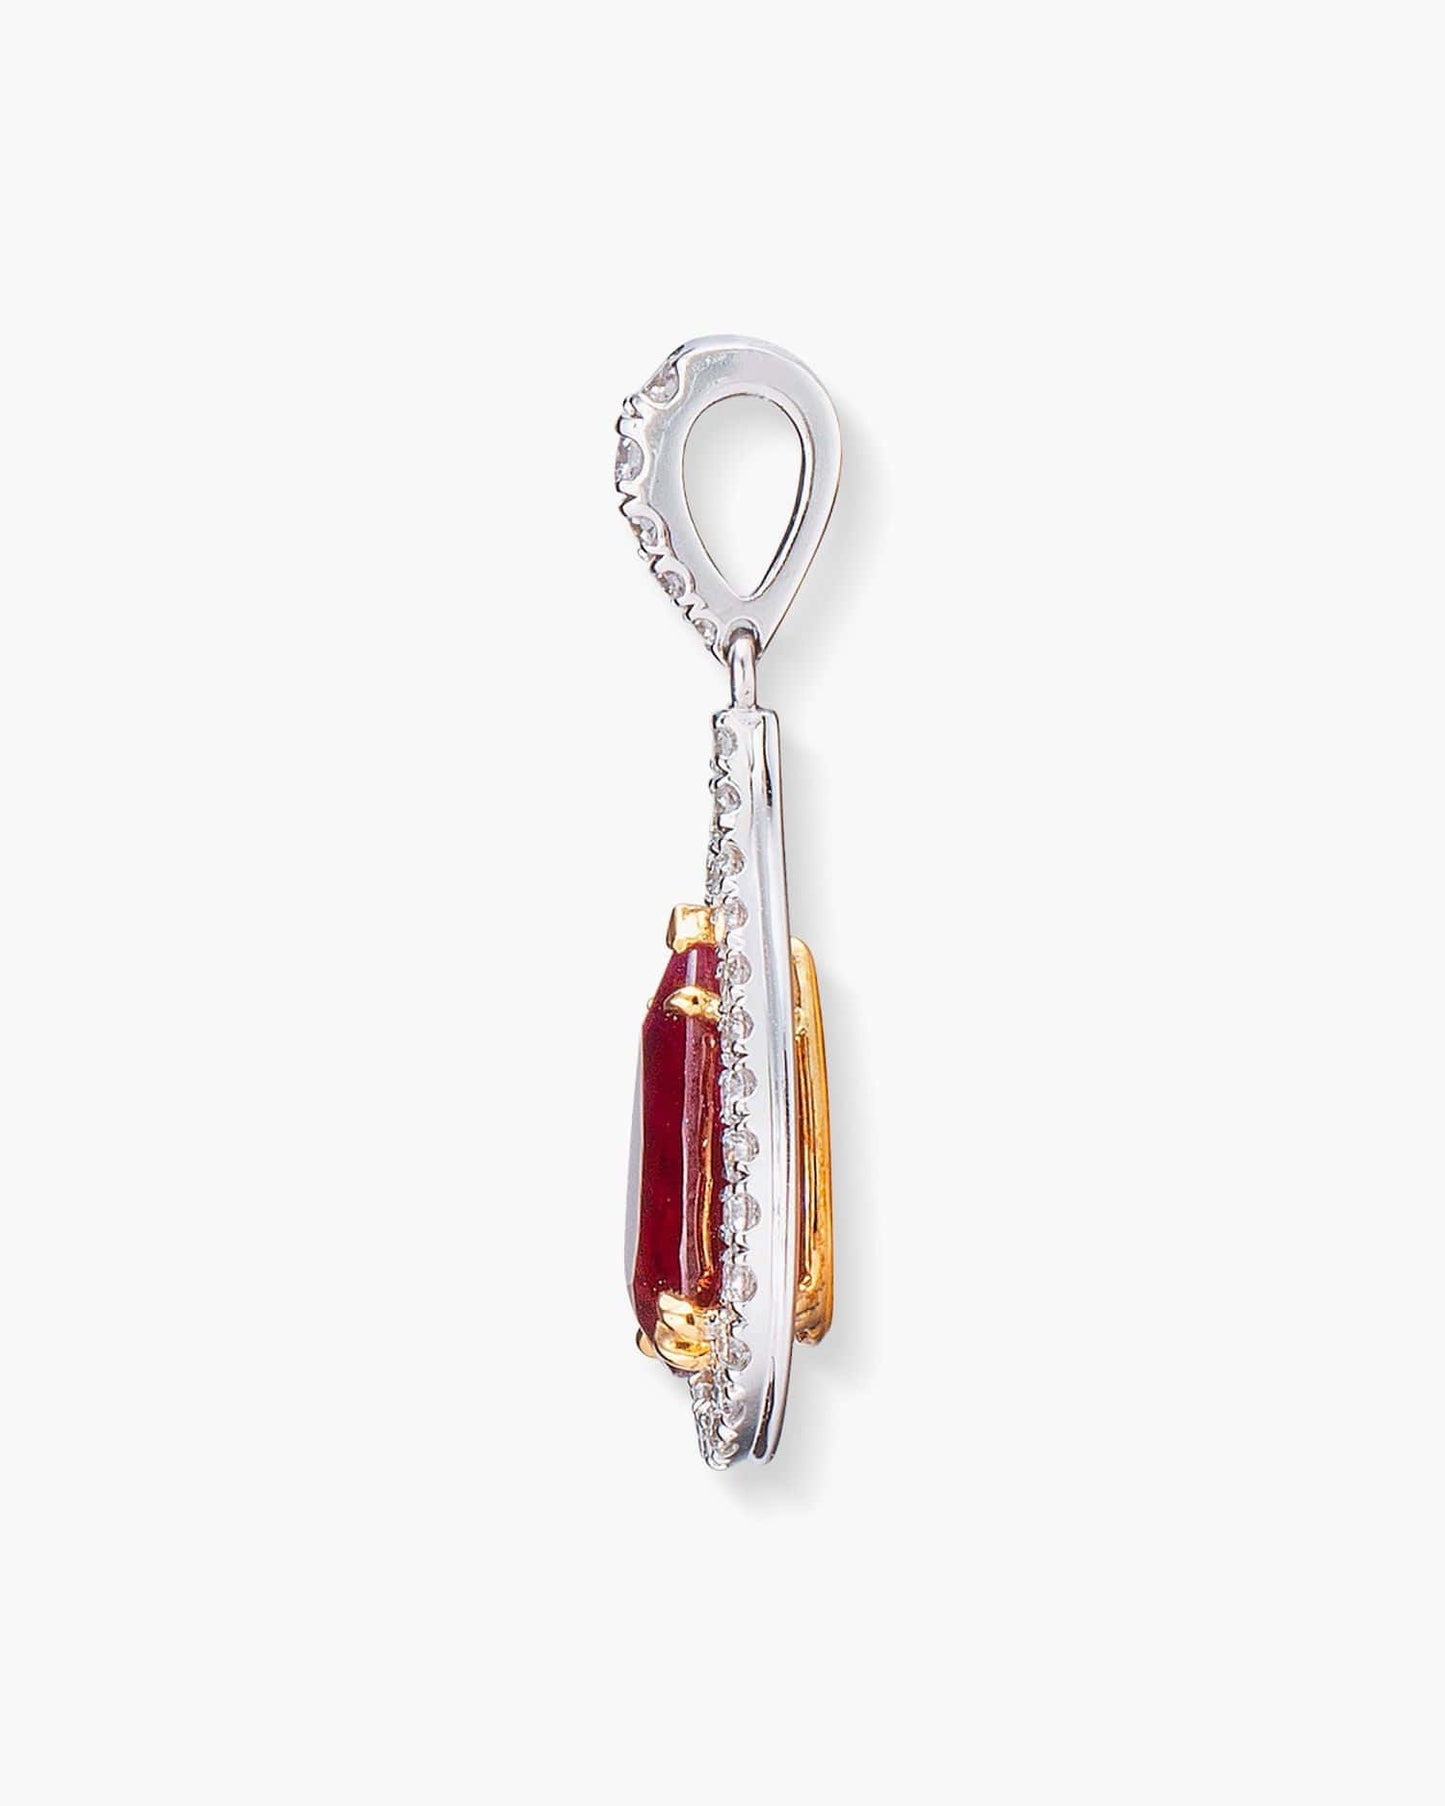 1.35 carat Pear Shape Burmese Ruby and Diamond Pendant Necklace